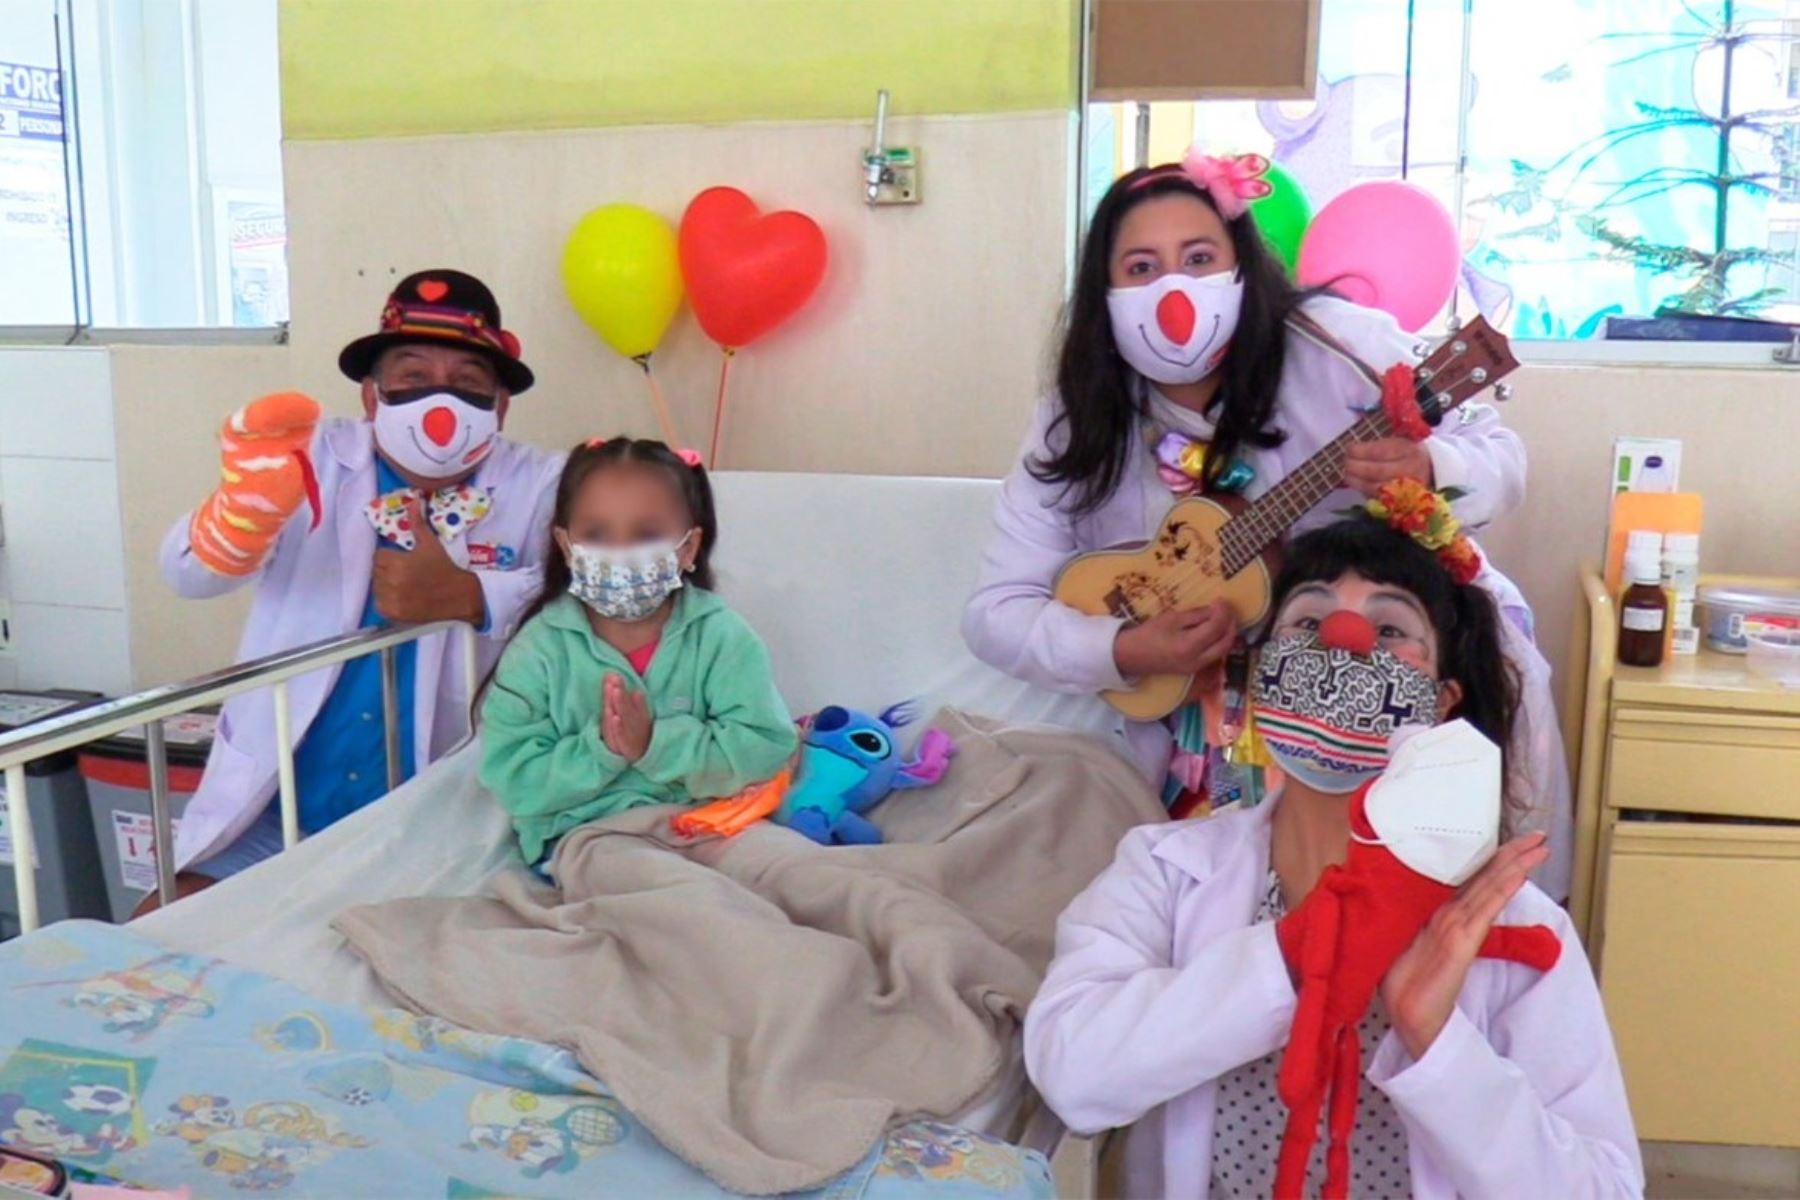 INSN–Breña: clowns hospitalarios brindan risoterapia a niños con fibrosis quística